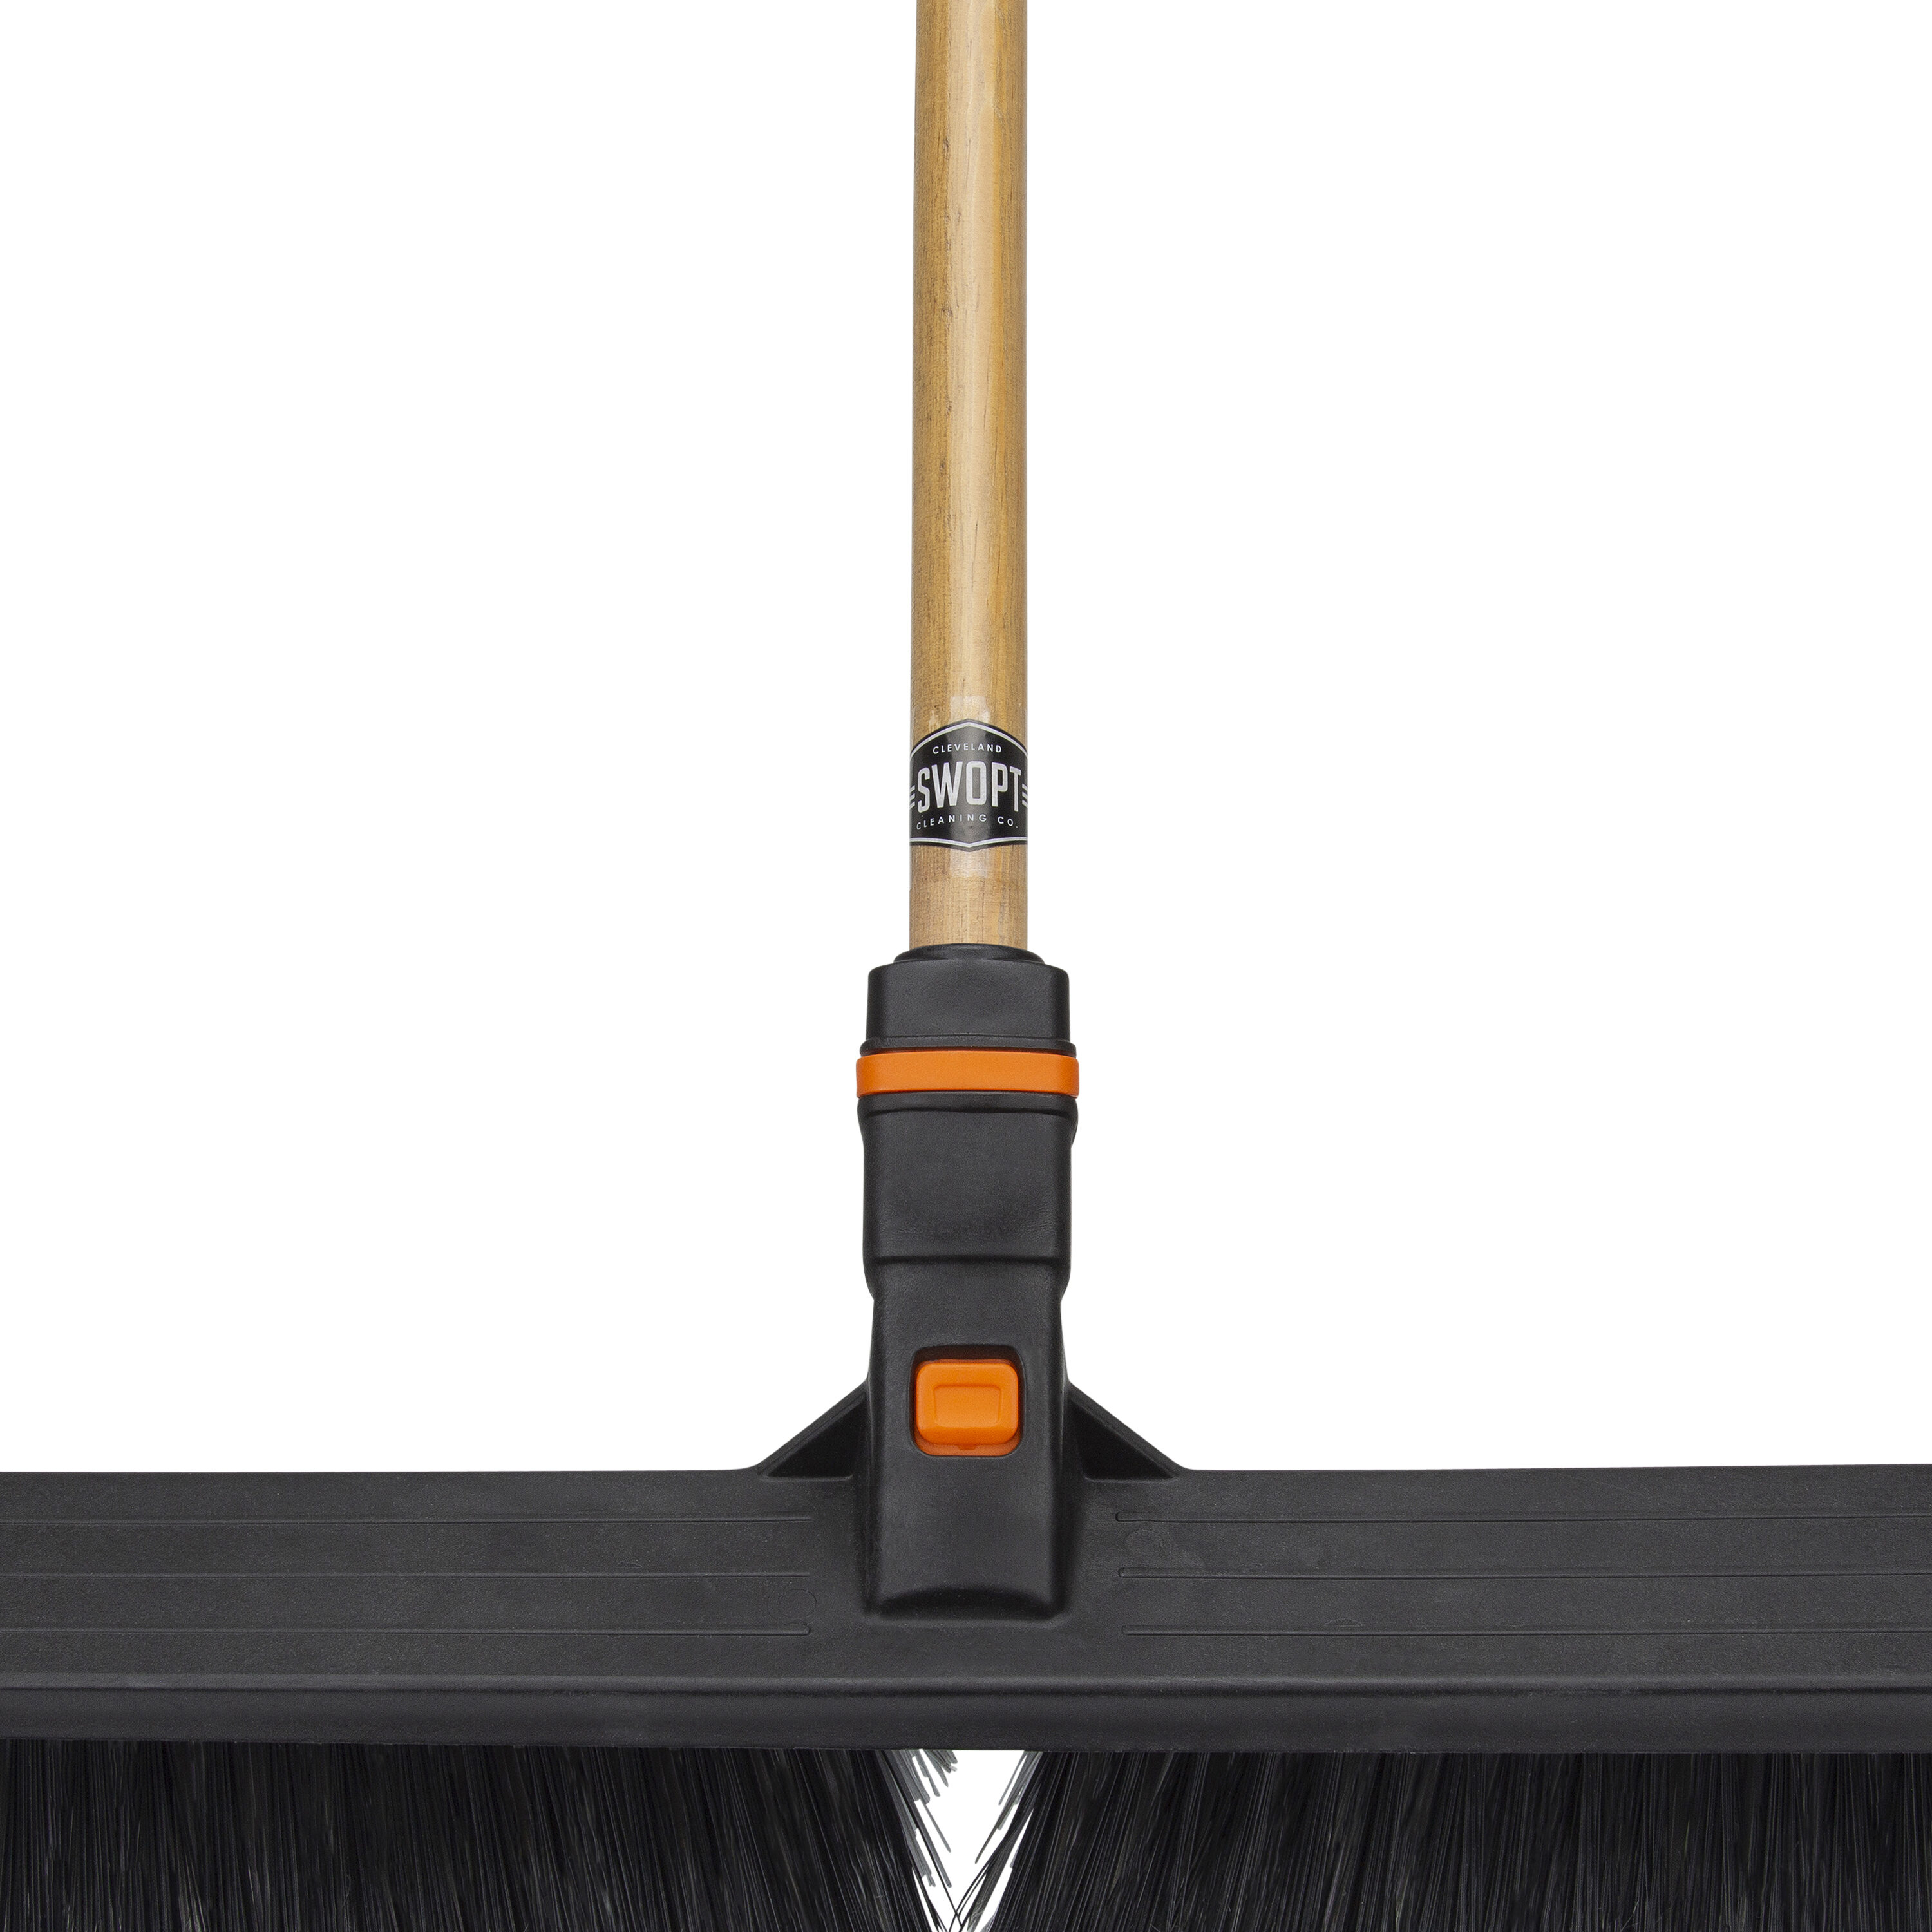 SWOPT 24” Floor Squeegee, 24” Multi-Surface Push Broom + 60 Eva Foam Comfort Grip Wooden Handle, Combo — 2 Cleaning Heads with Long Handle